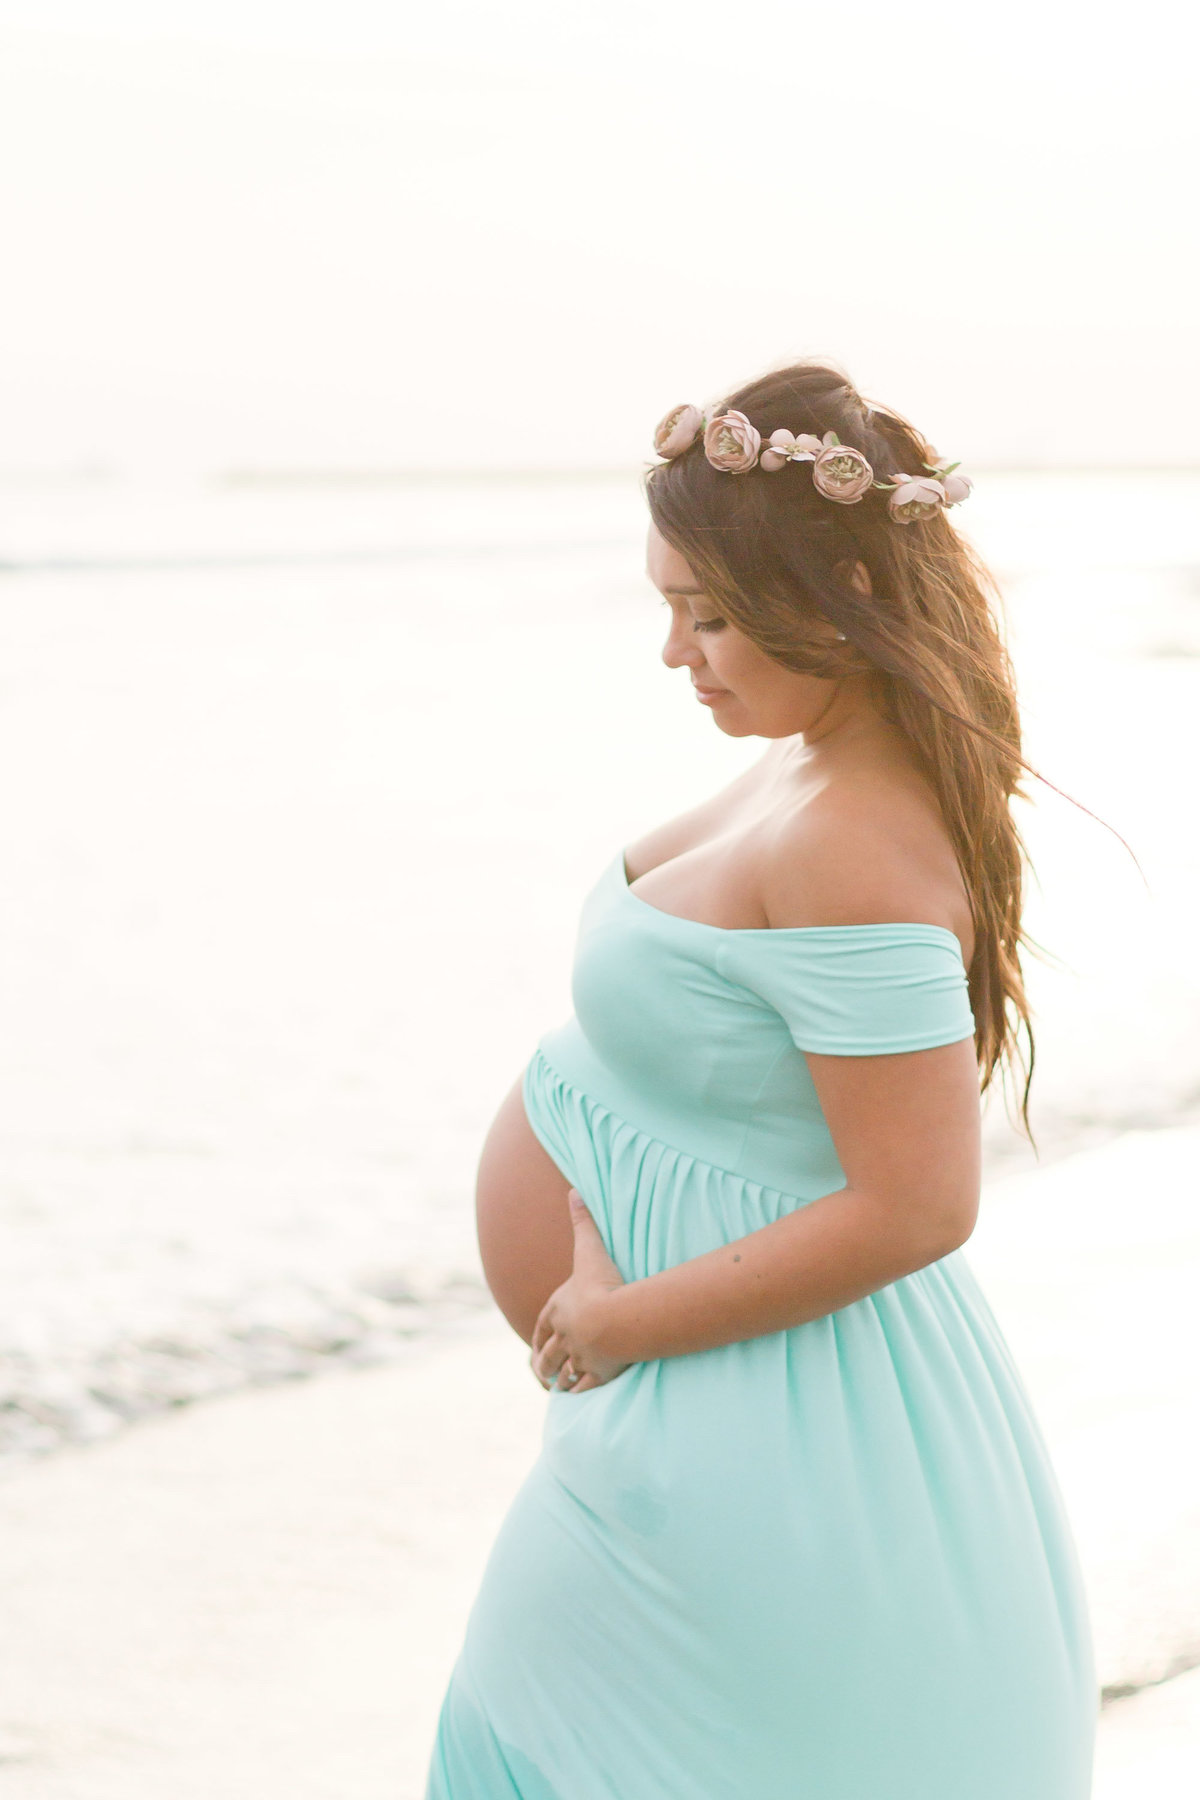 seal beach, maternity portraits, mint green, flower crown, pregnant, portrait